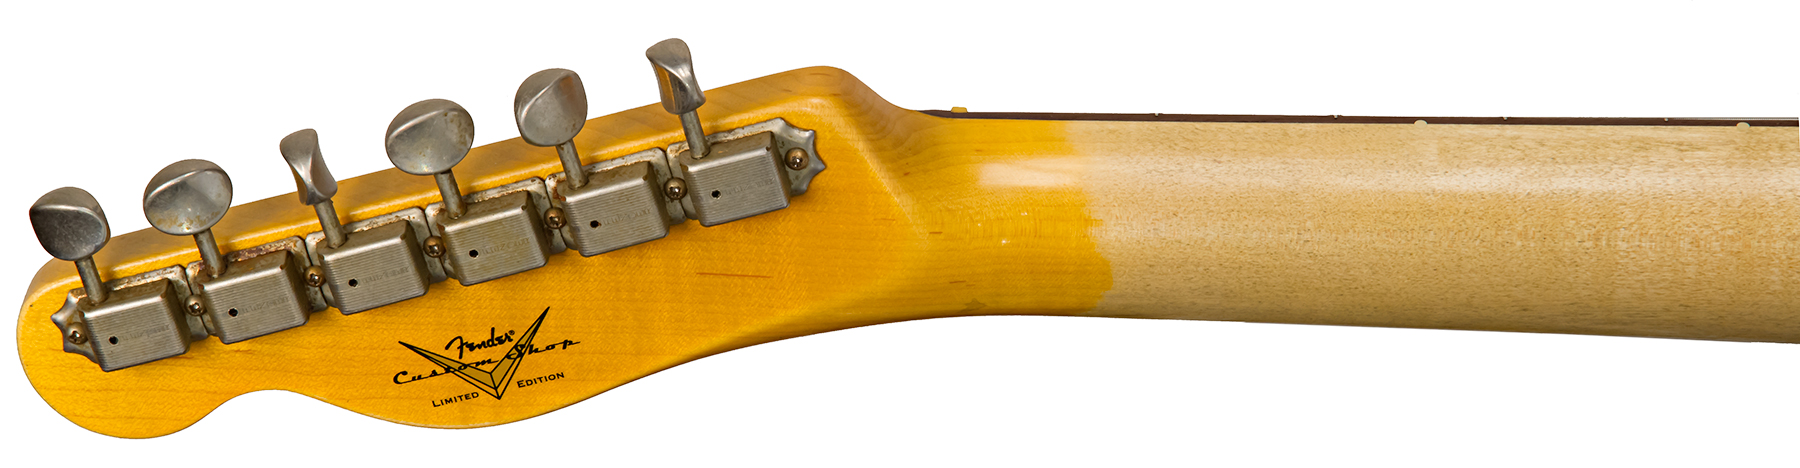 Fender Custom Shop Tele 1960 Rw #cz549121 - Journeyman Relic Purple Metallic - Televorm elektrische gitaar - Variation 5